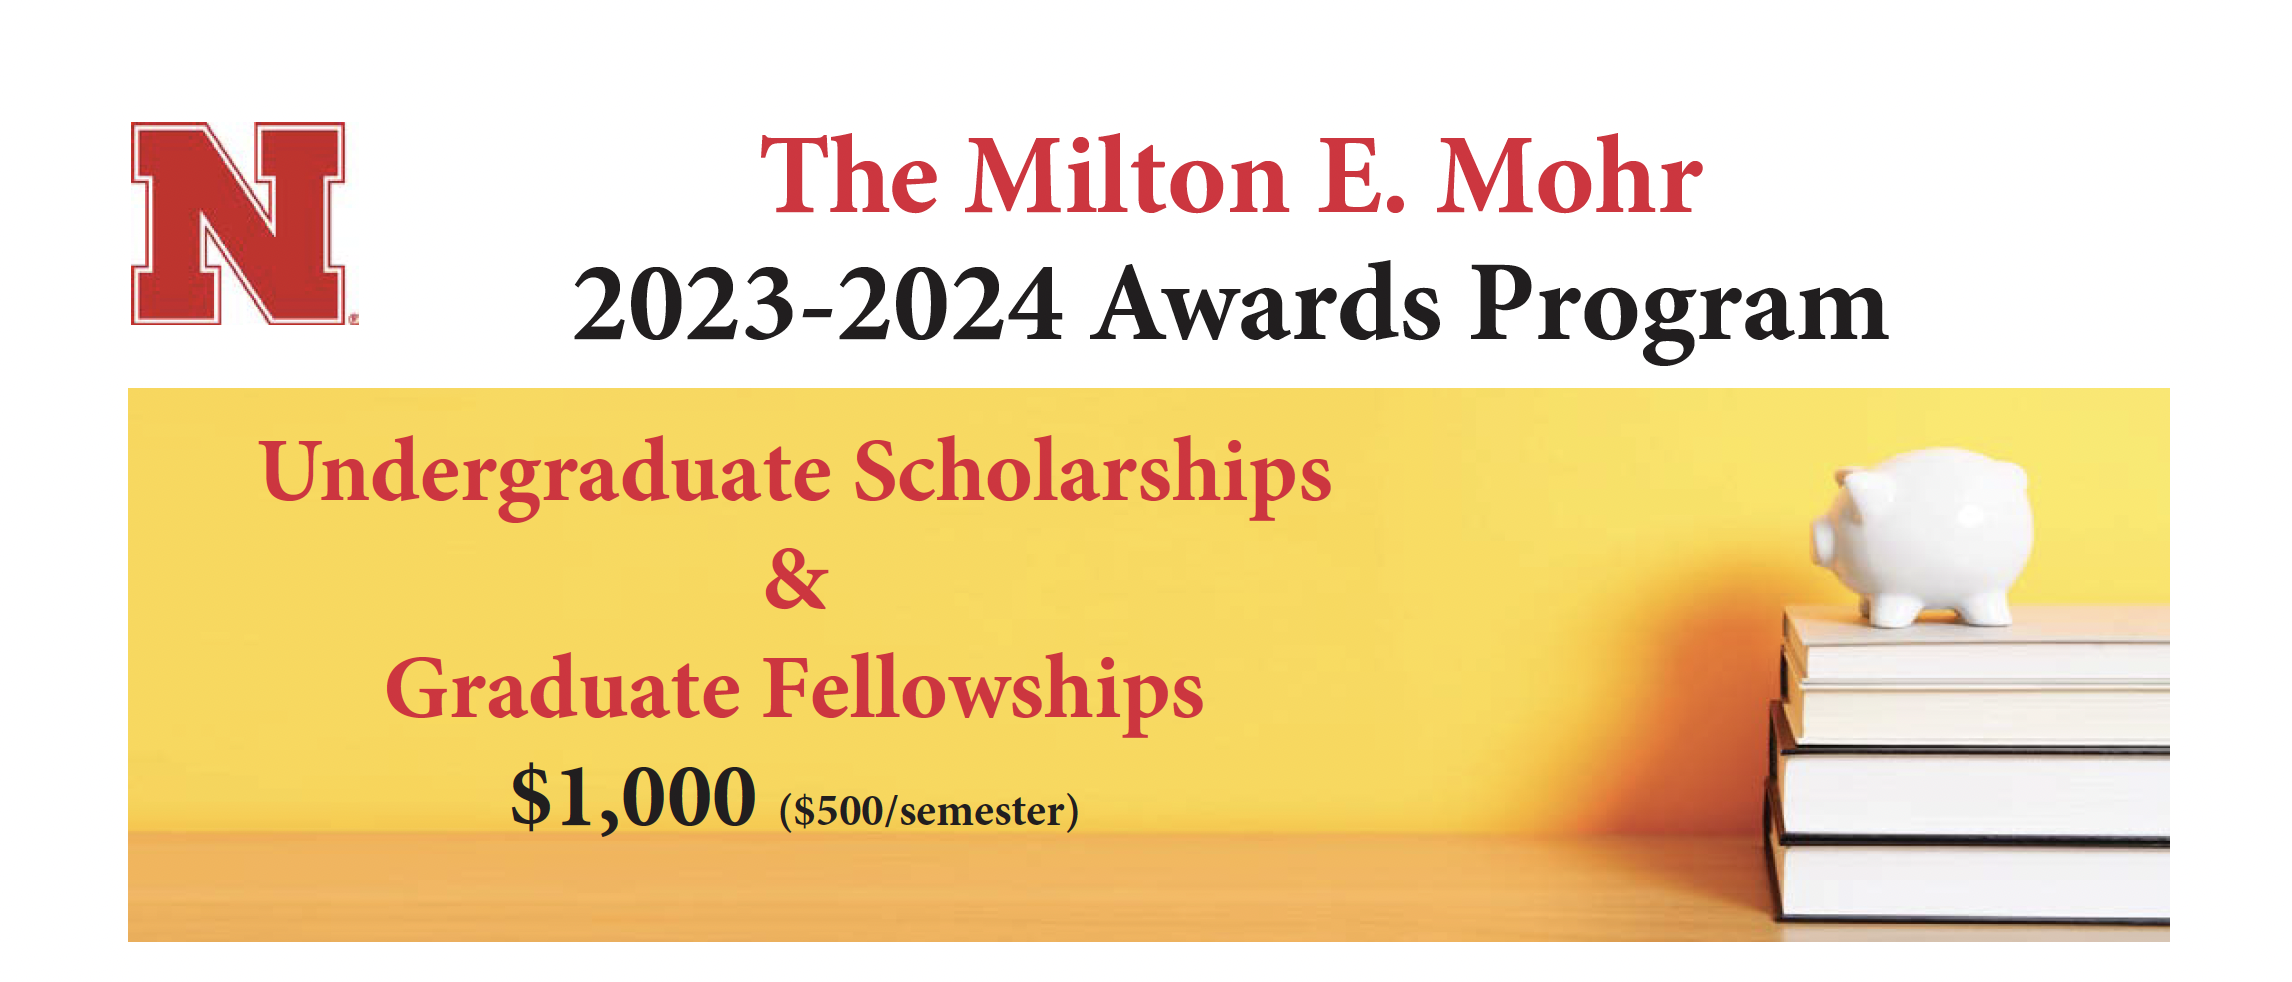 Milton E. Mohr Awards Program